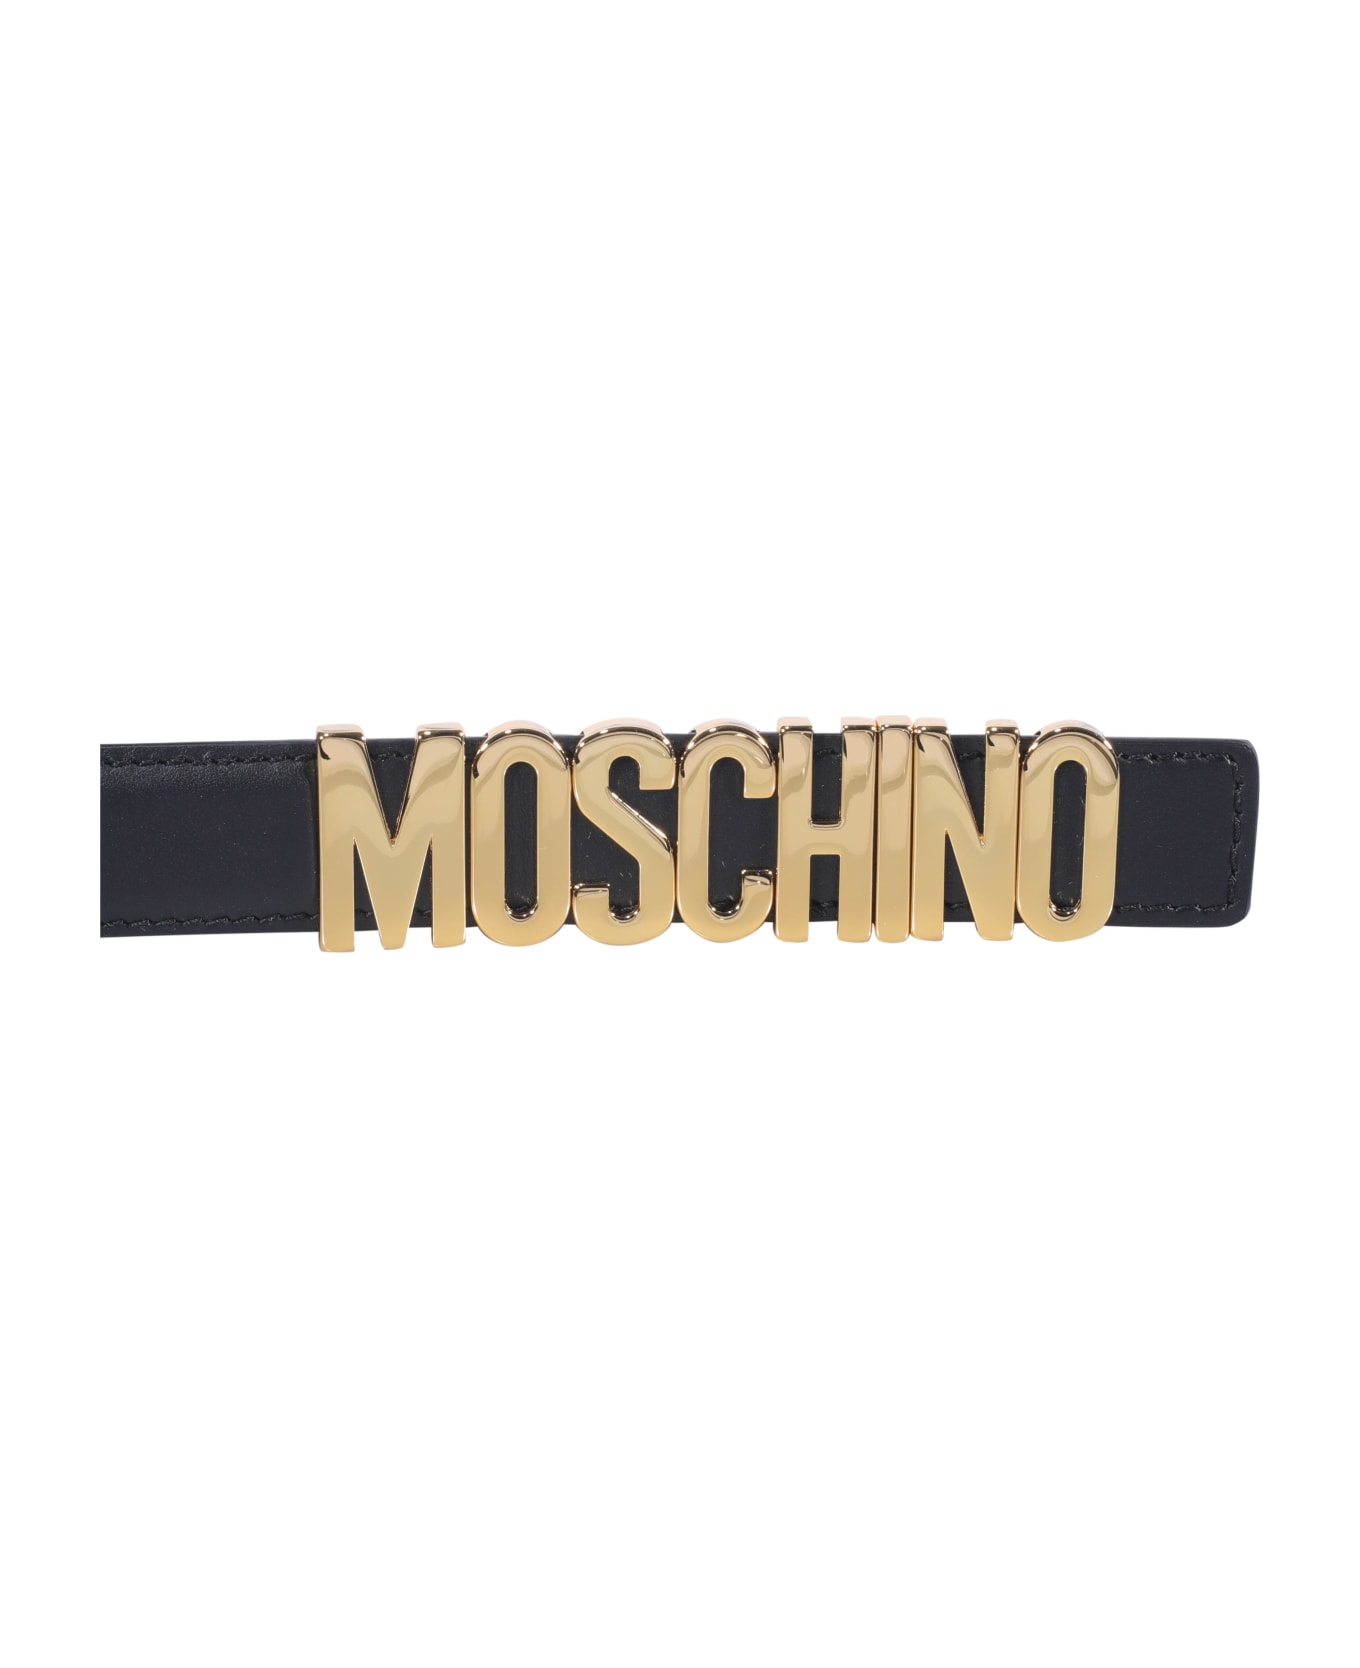 Moschino Logo Plaque Buckle Belt - Nero